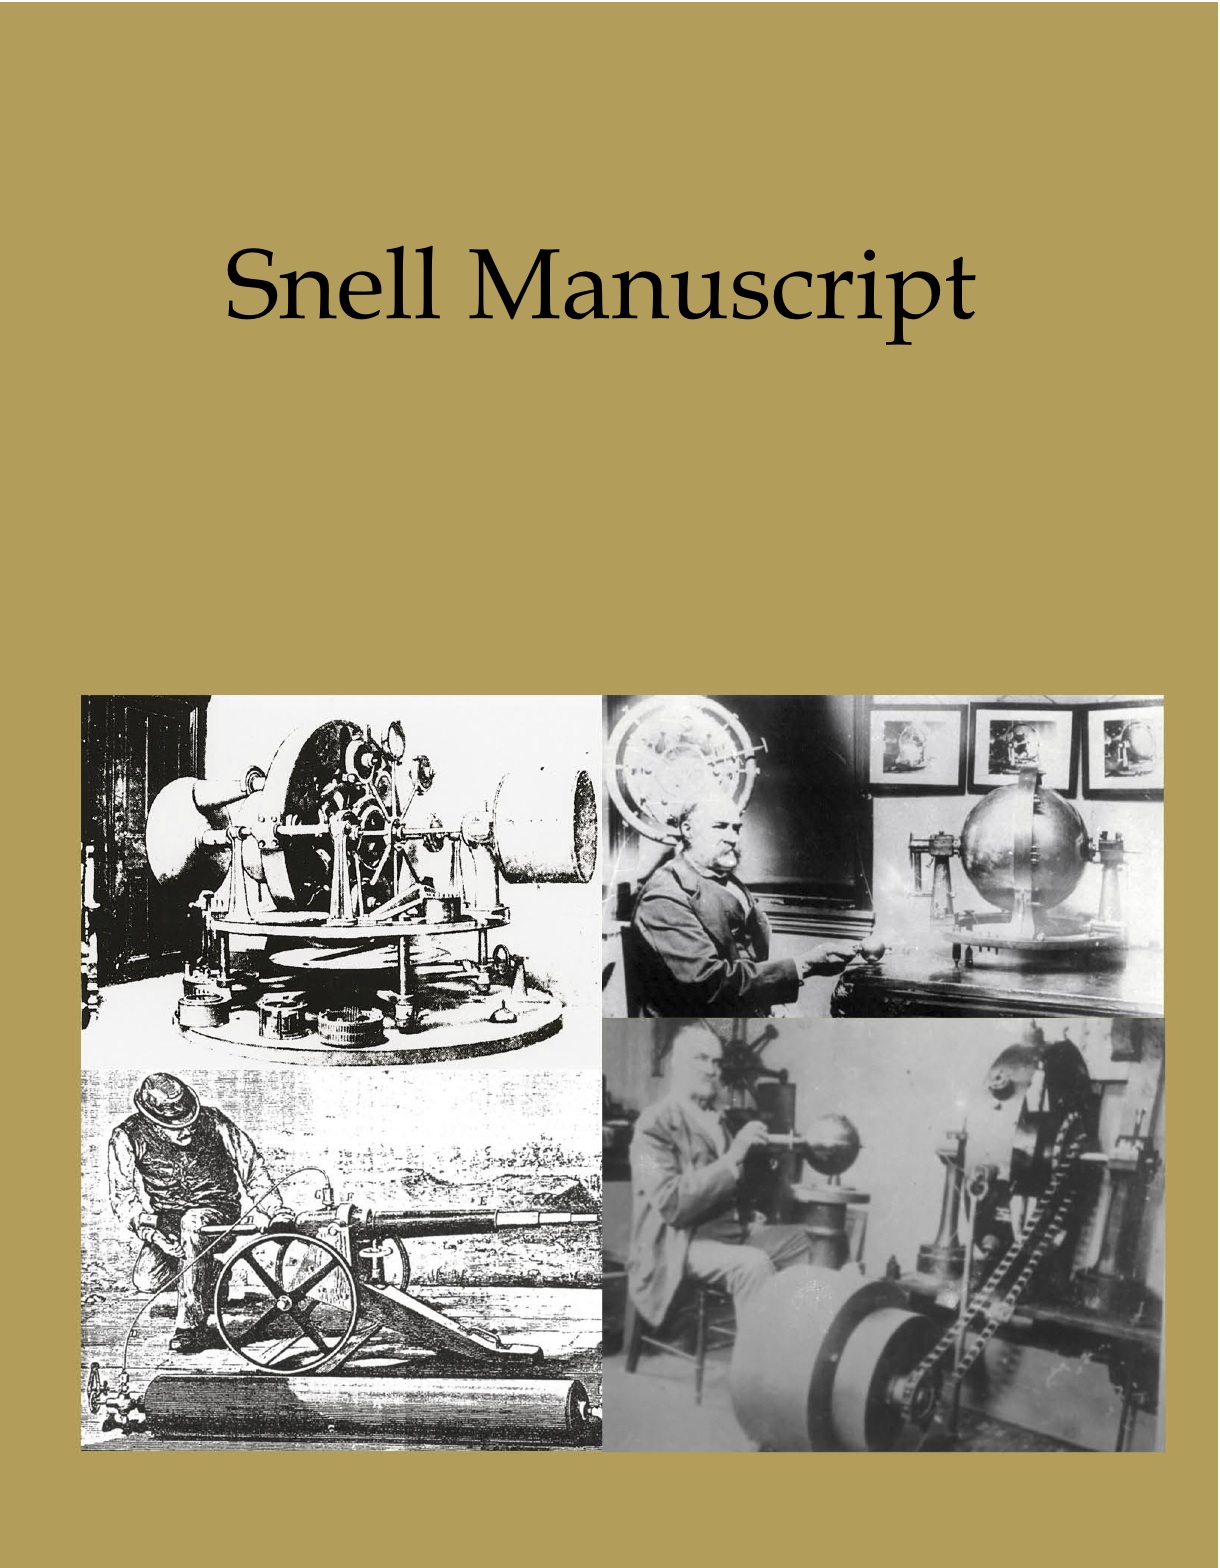 The Snell Manuscript